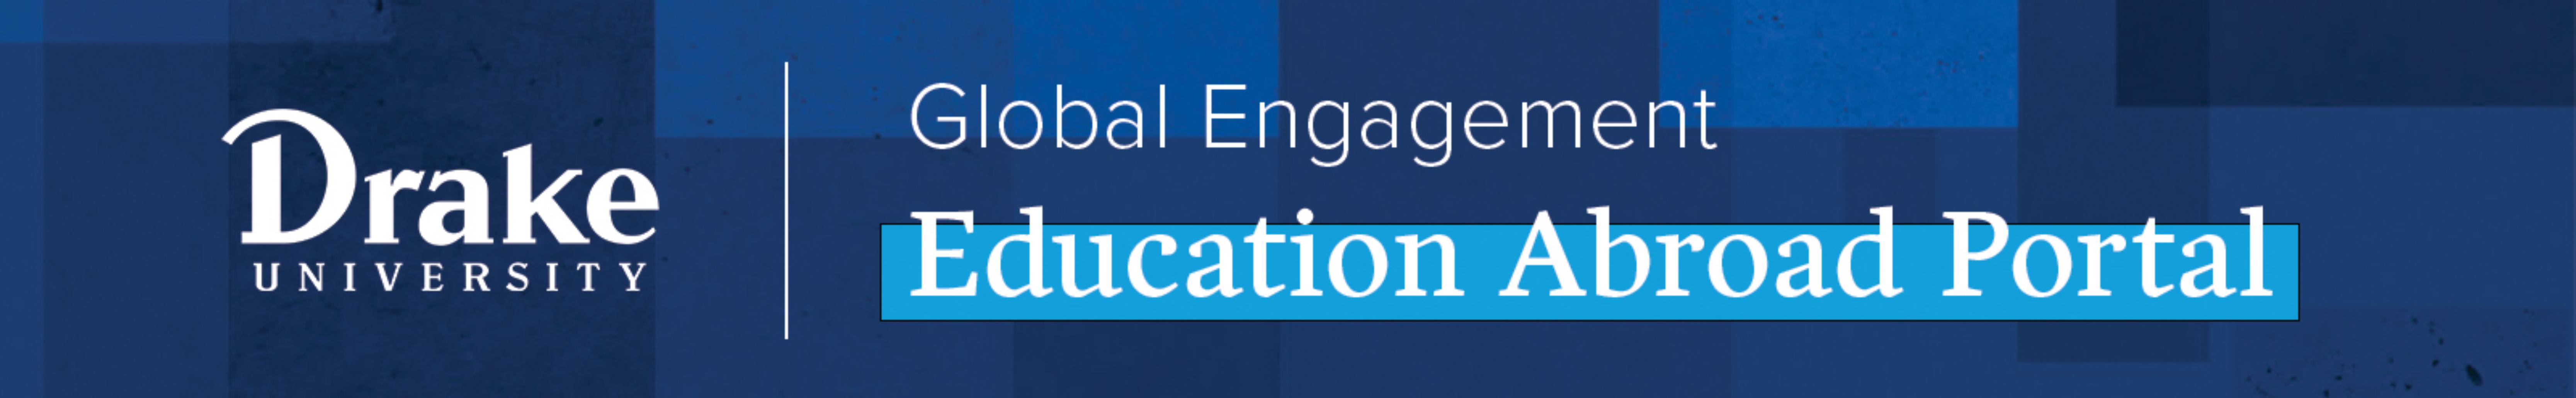 Global Engagement - Drake University